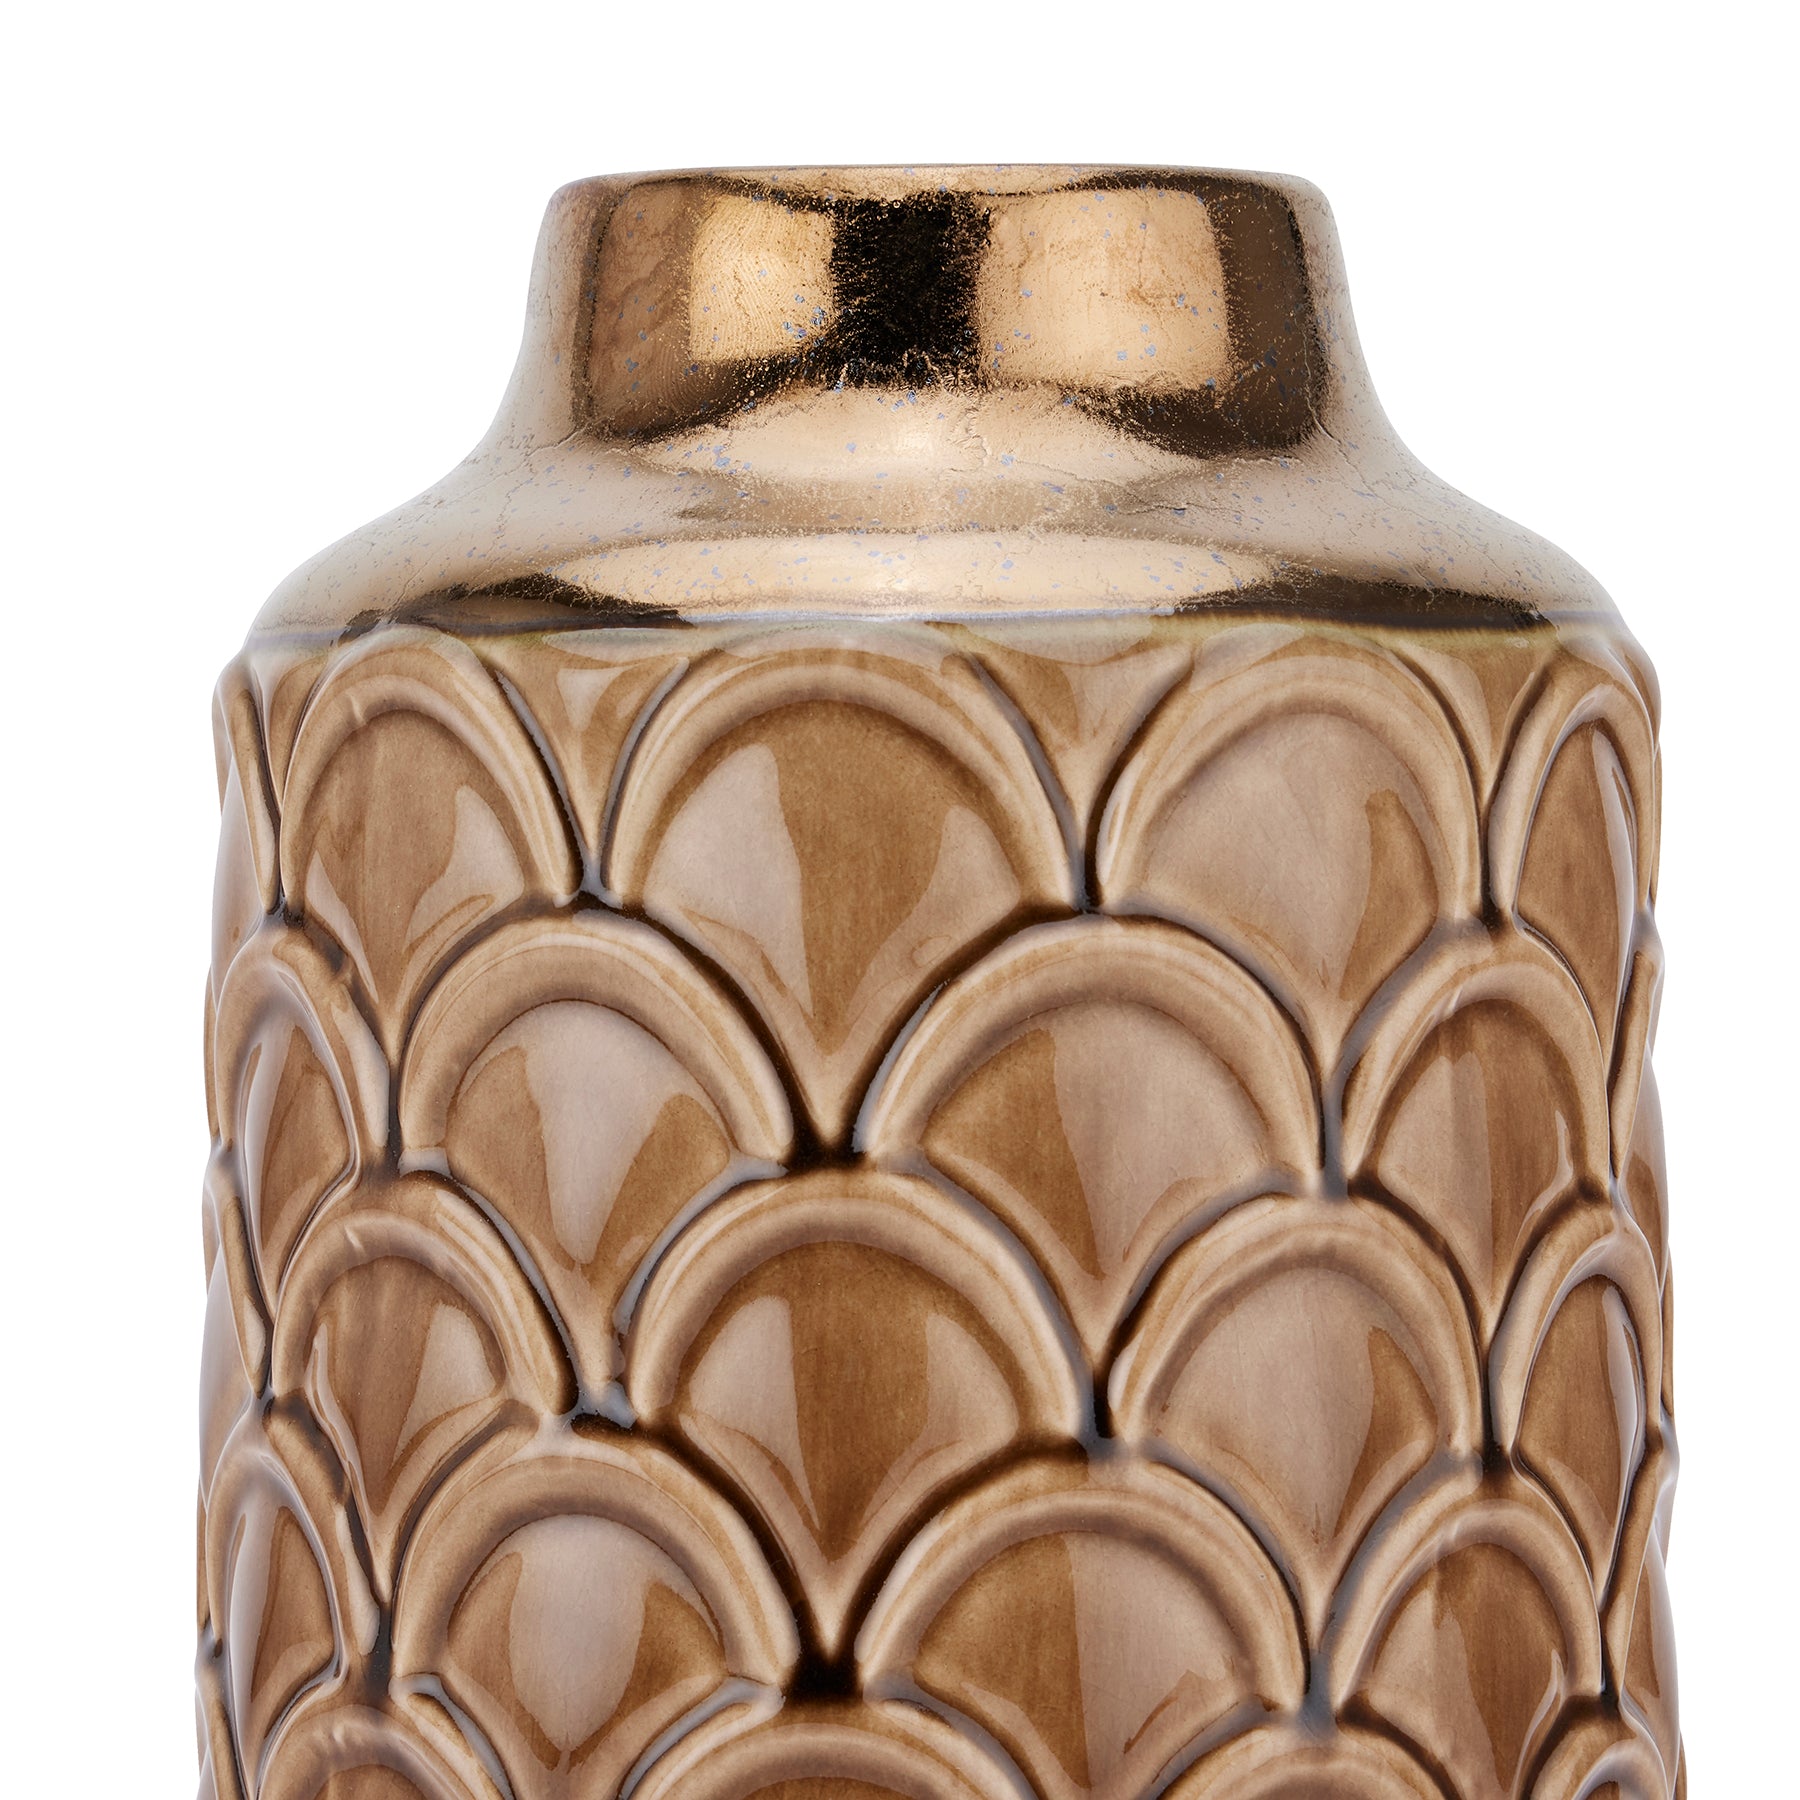 Seville Collection Small Caramel Scalloped Vase